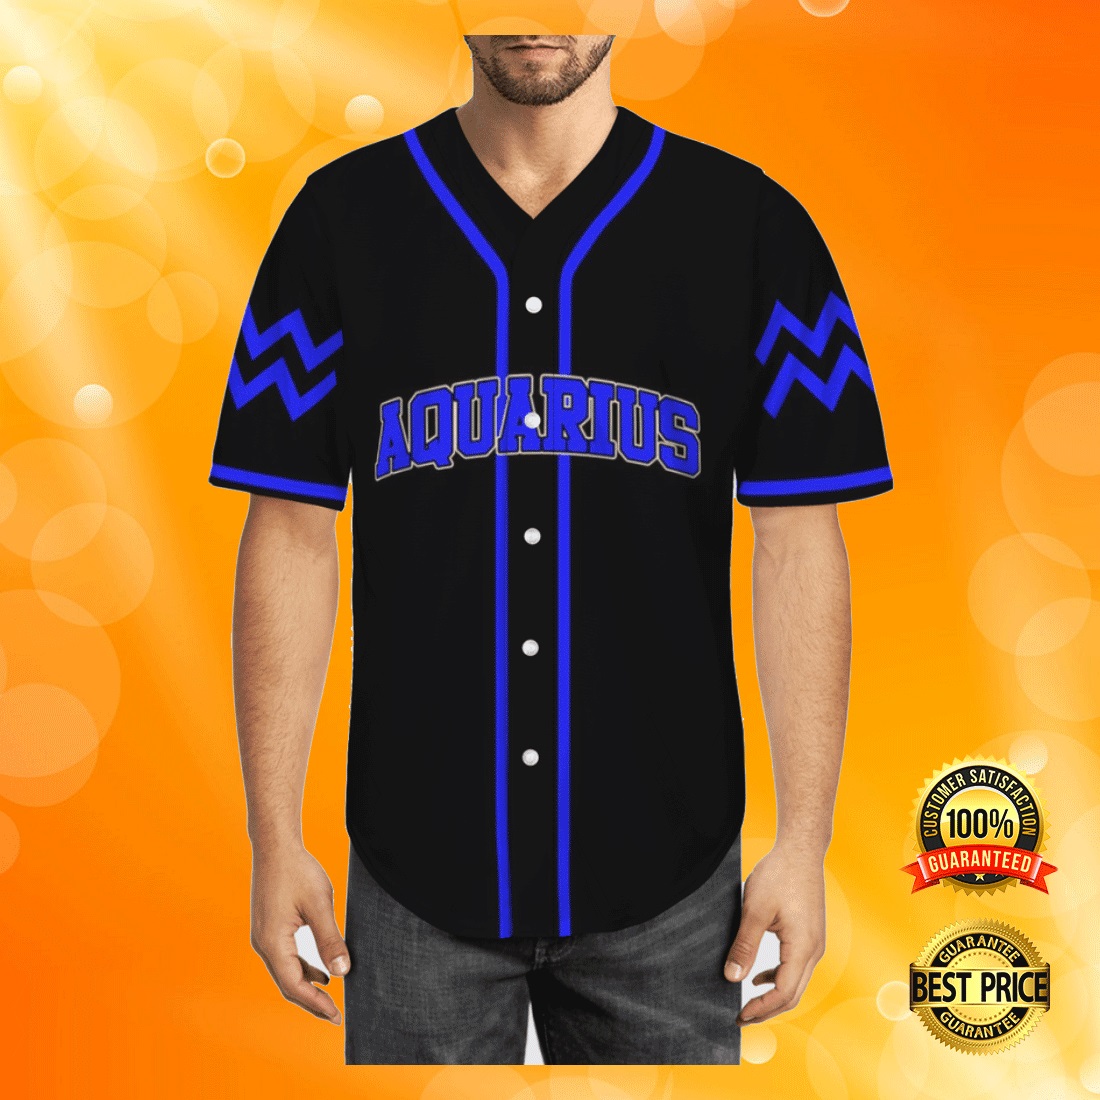 Aquarius baseball jersey 1